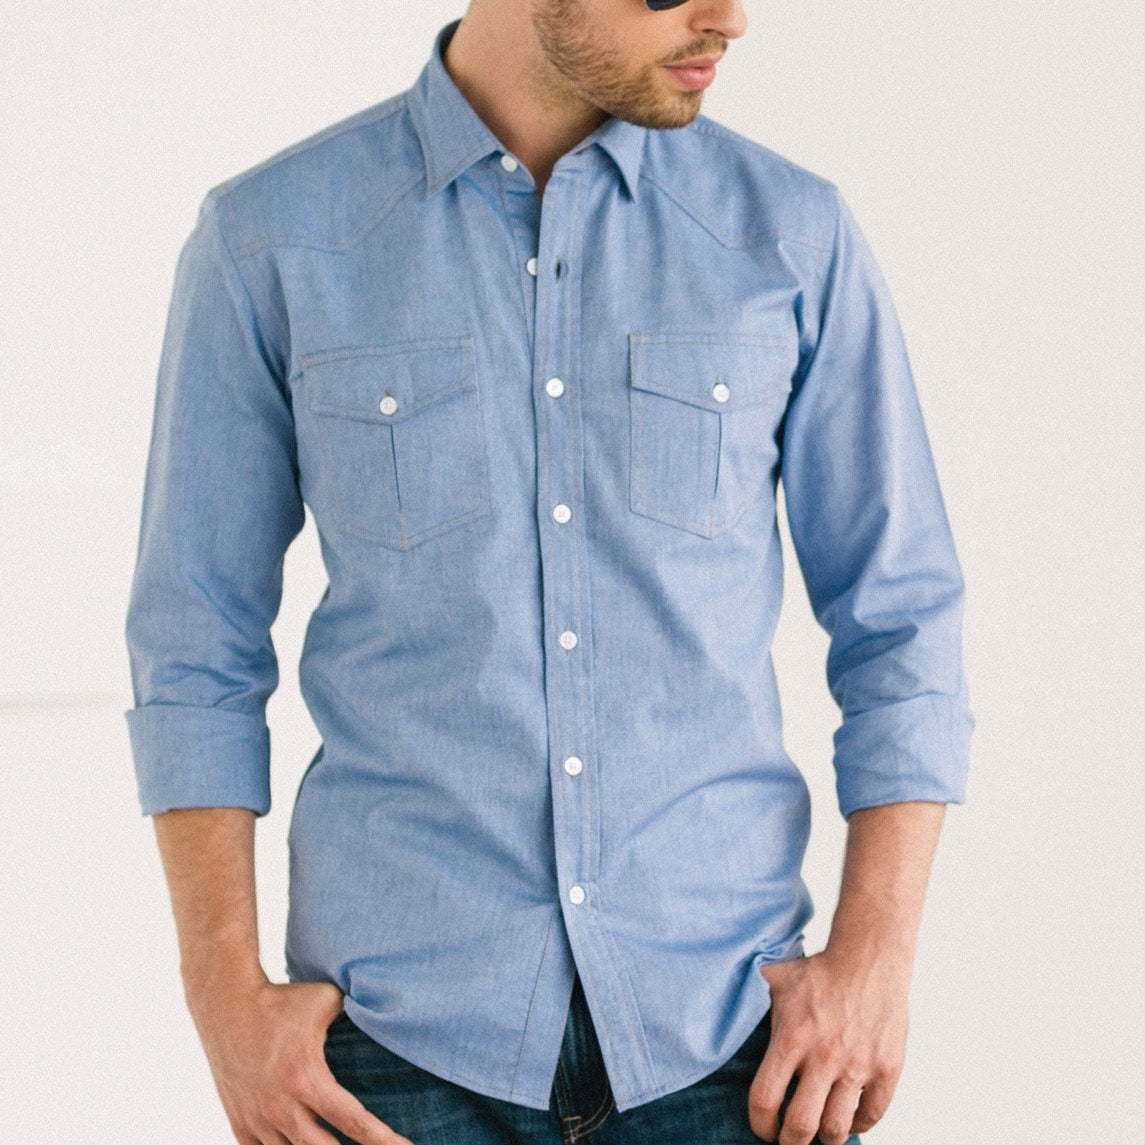 Maker Shirt – Classic Blue Cotton Oxford